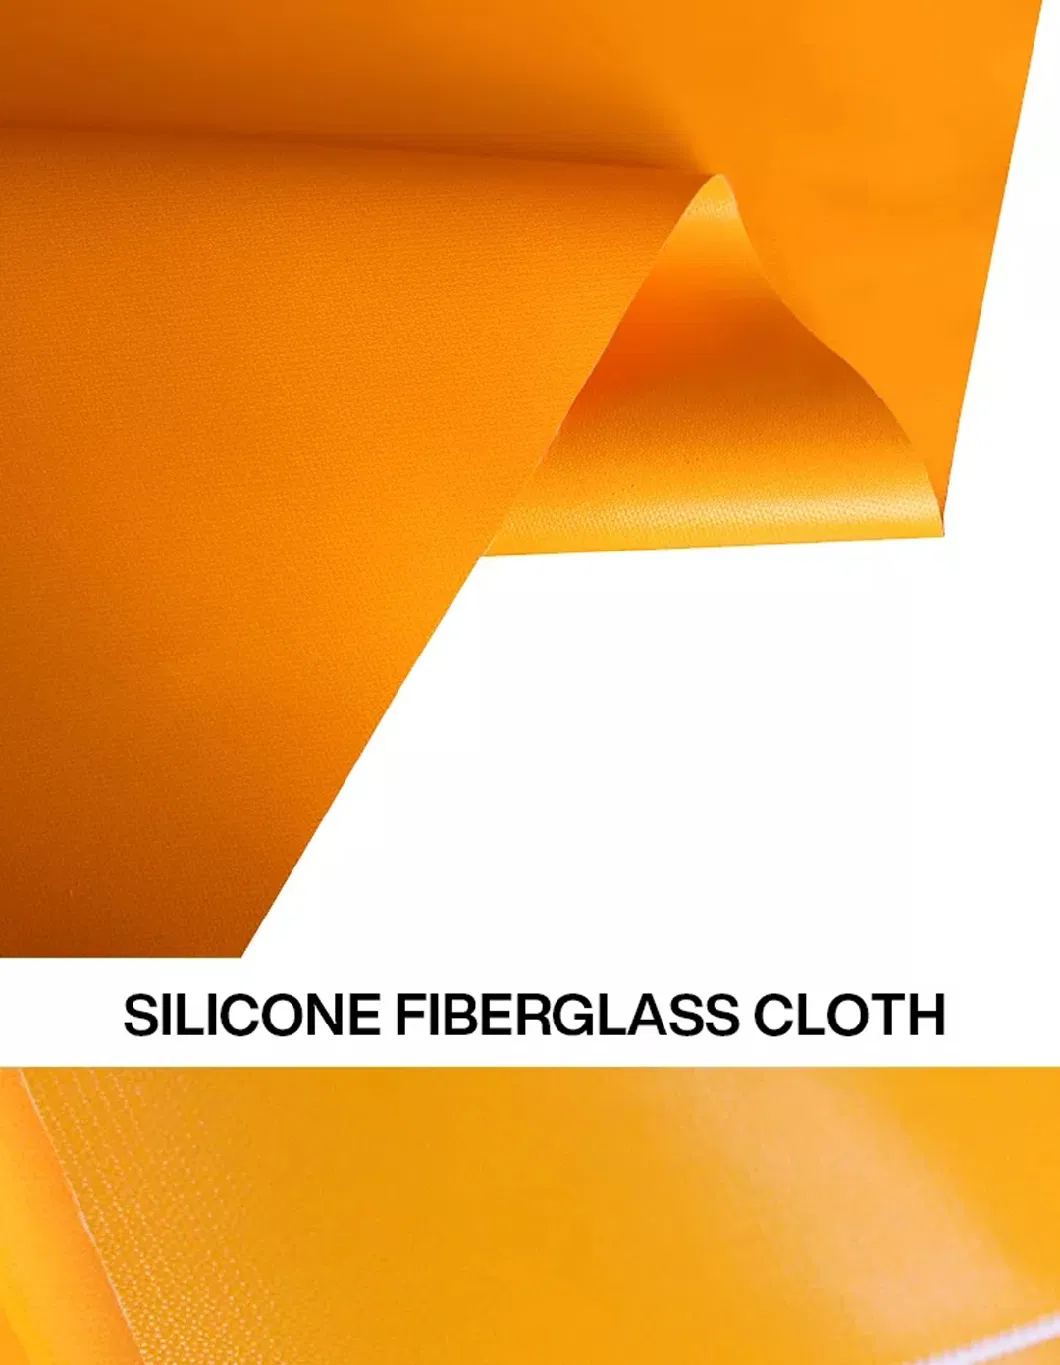 Hotel Hospital Safety Fireproof Smoke Curtain Silicone-Coated Fiberglass Cloth